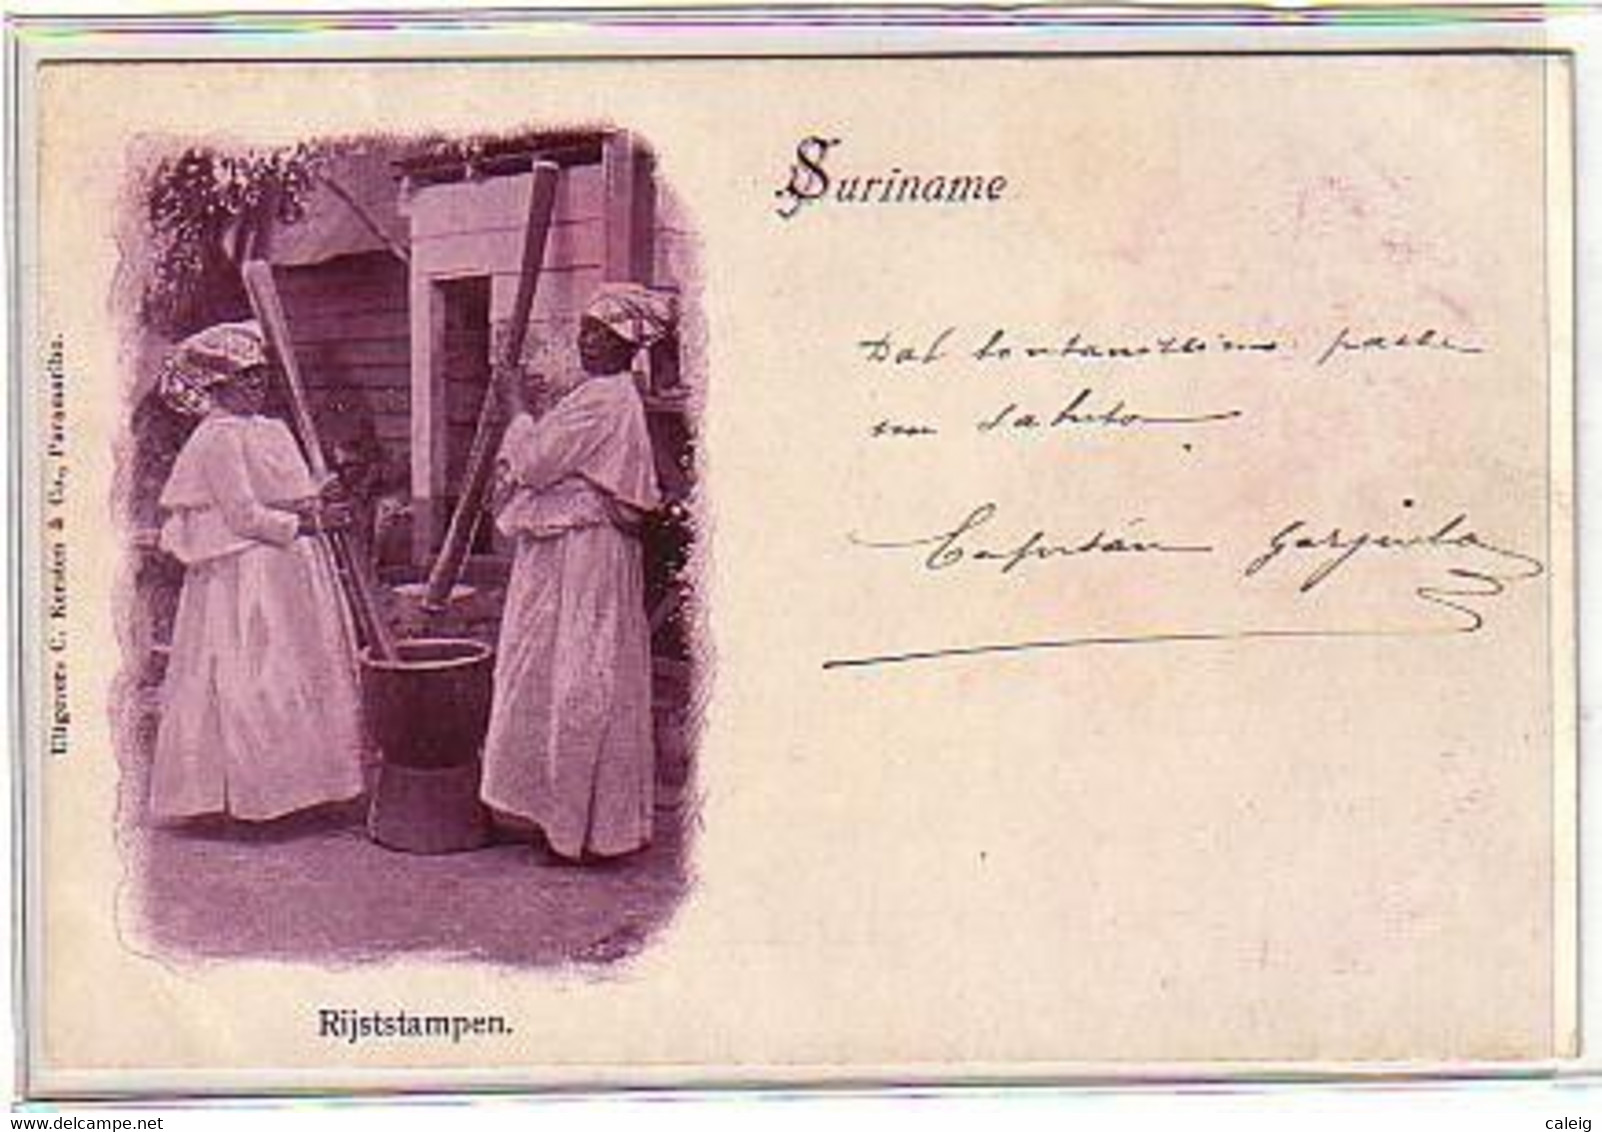 SURINAME - Rijstampen Ca 1900 Used In Letter - Surinam